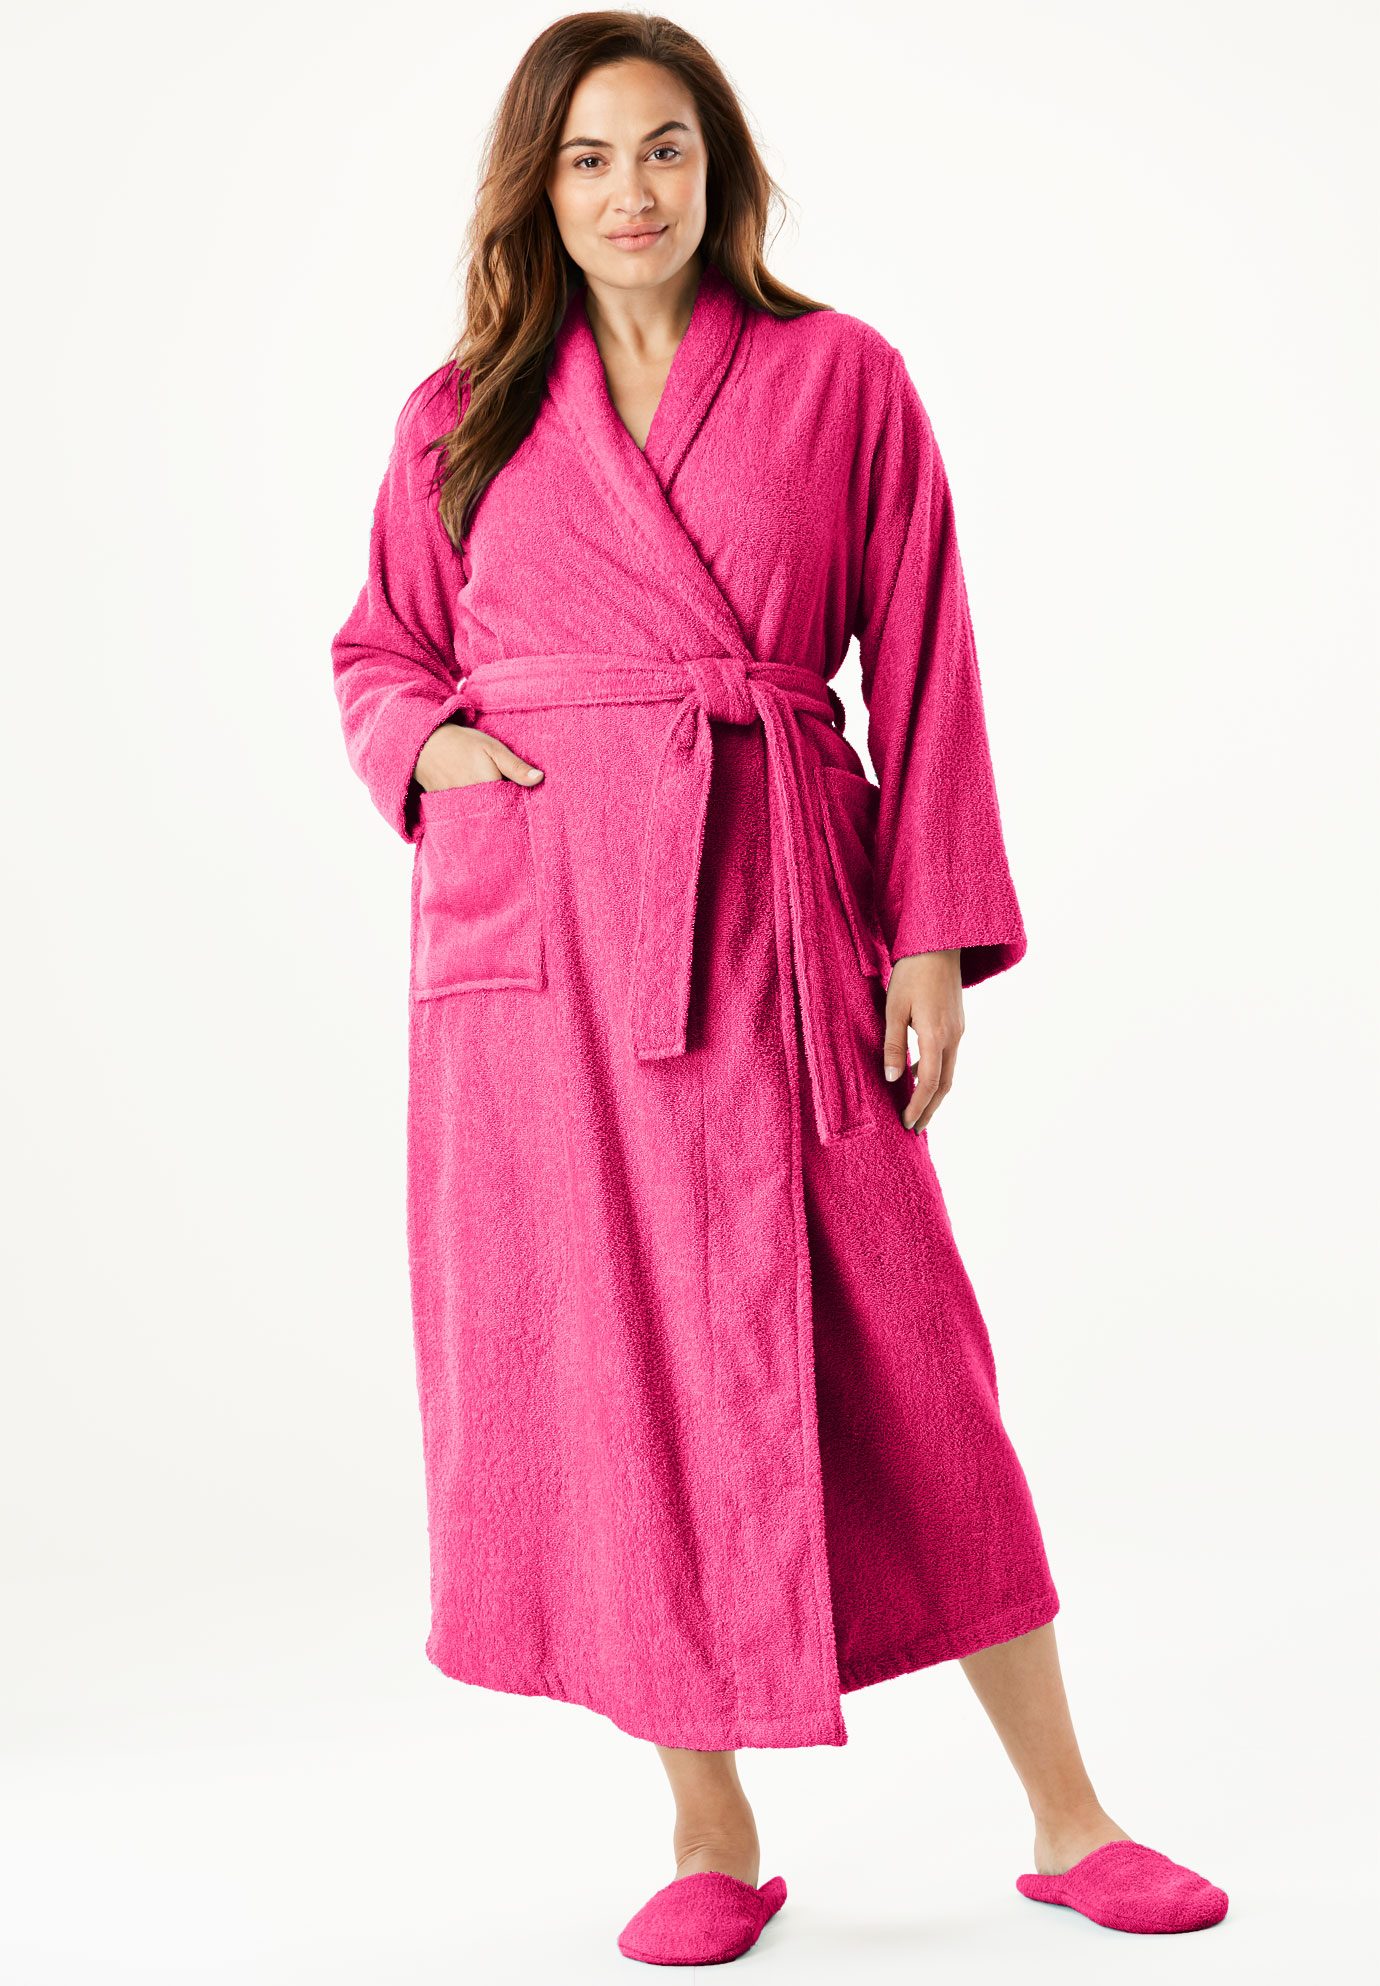 Get Pajama Robe And Slipper Set Images - Noveletras